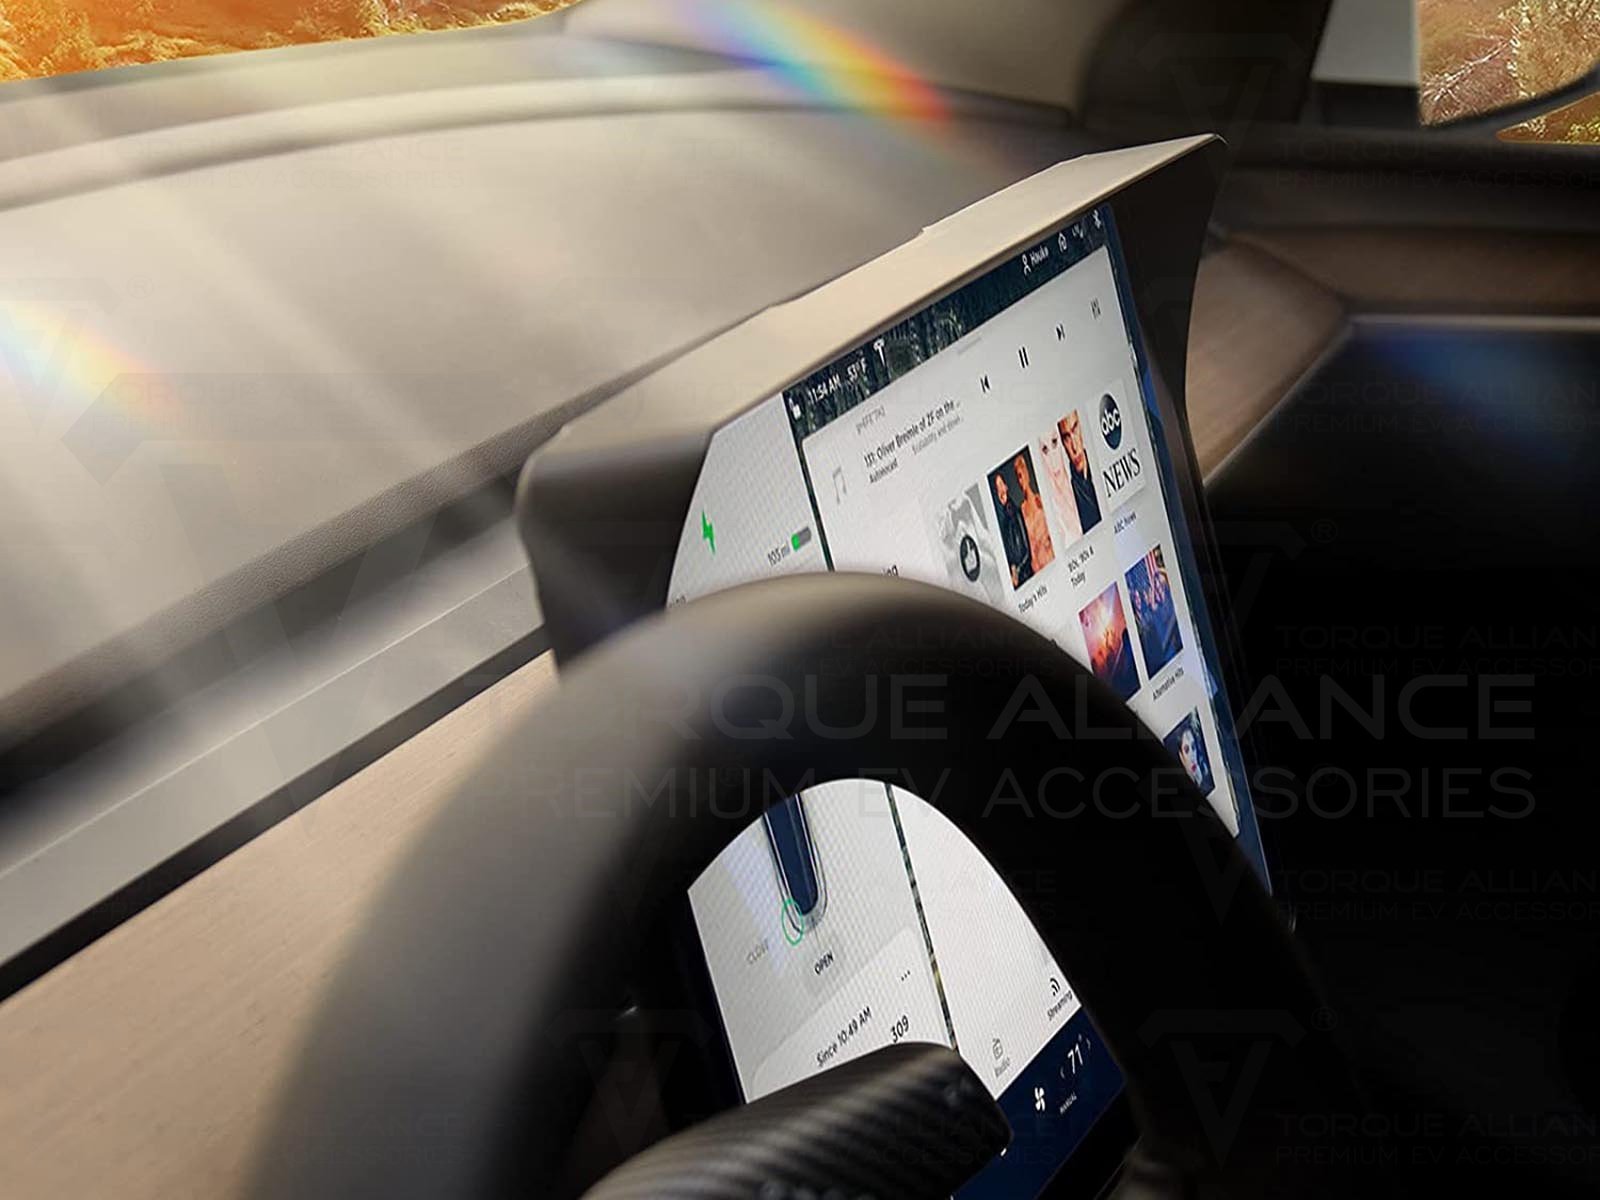 Tesla Model 3&Y: Screen Edge Protector, Anti-glare Cover - Torque Alliance